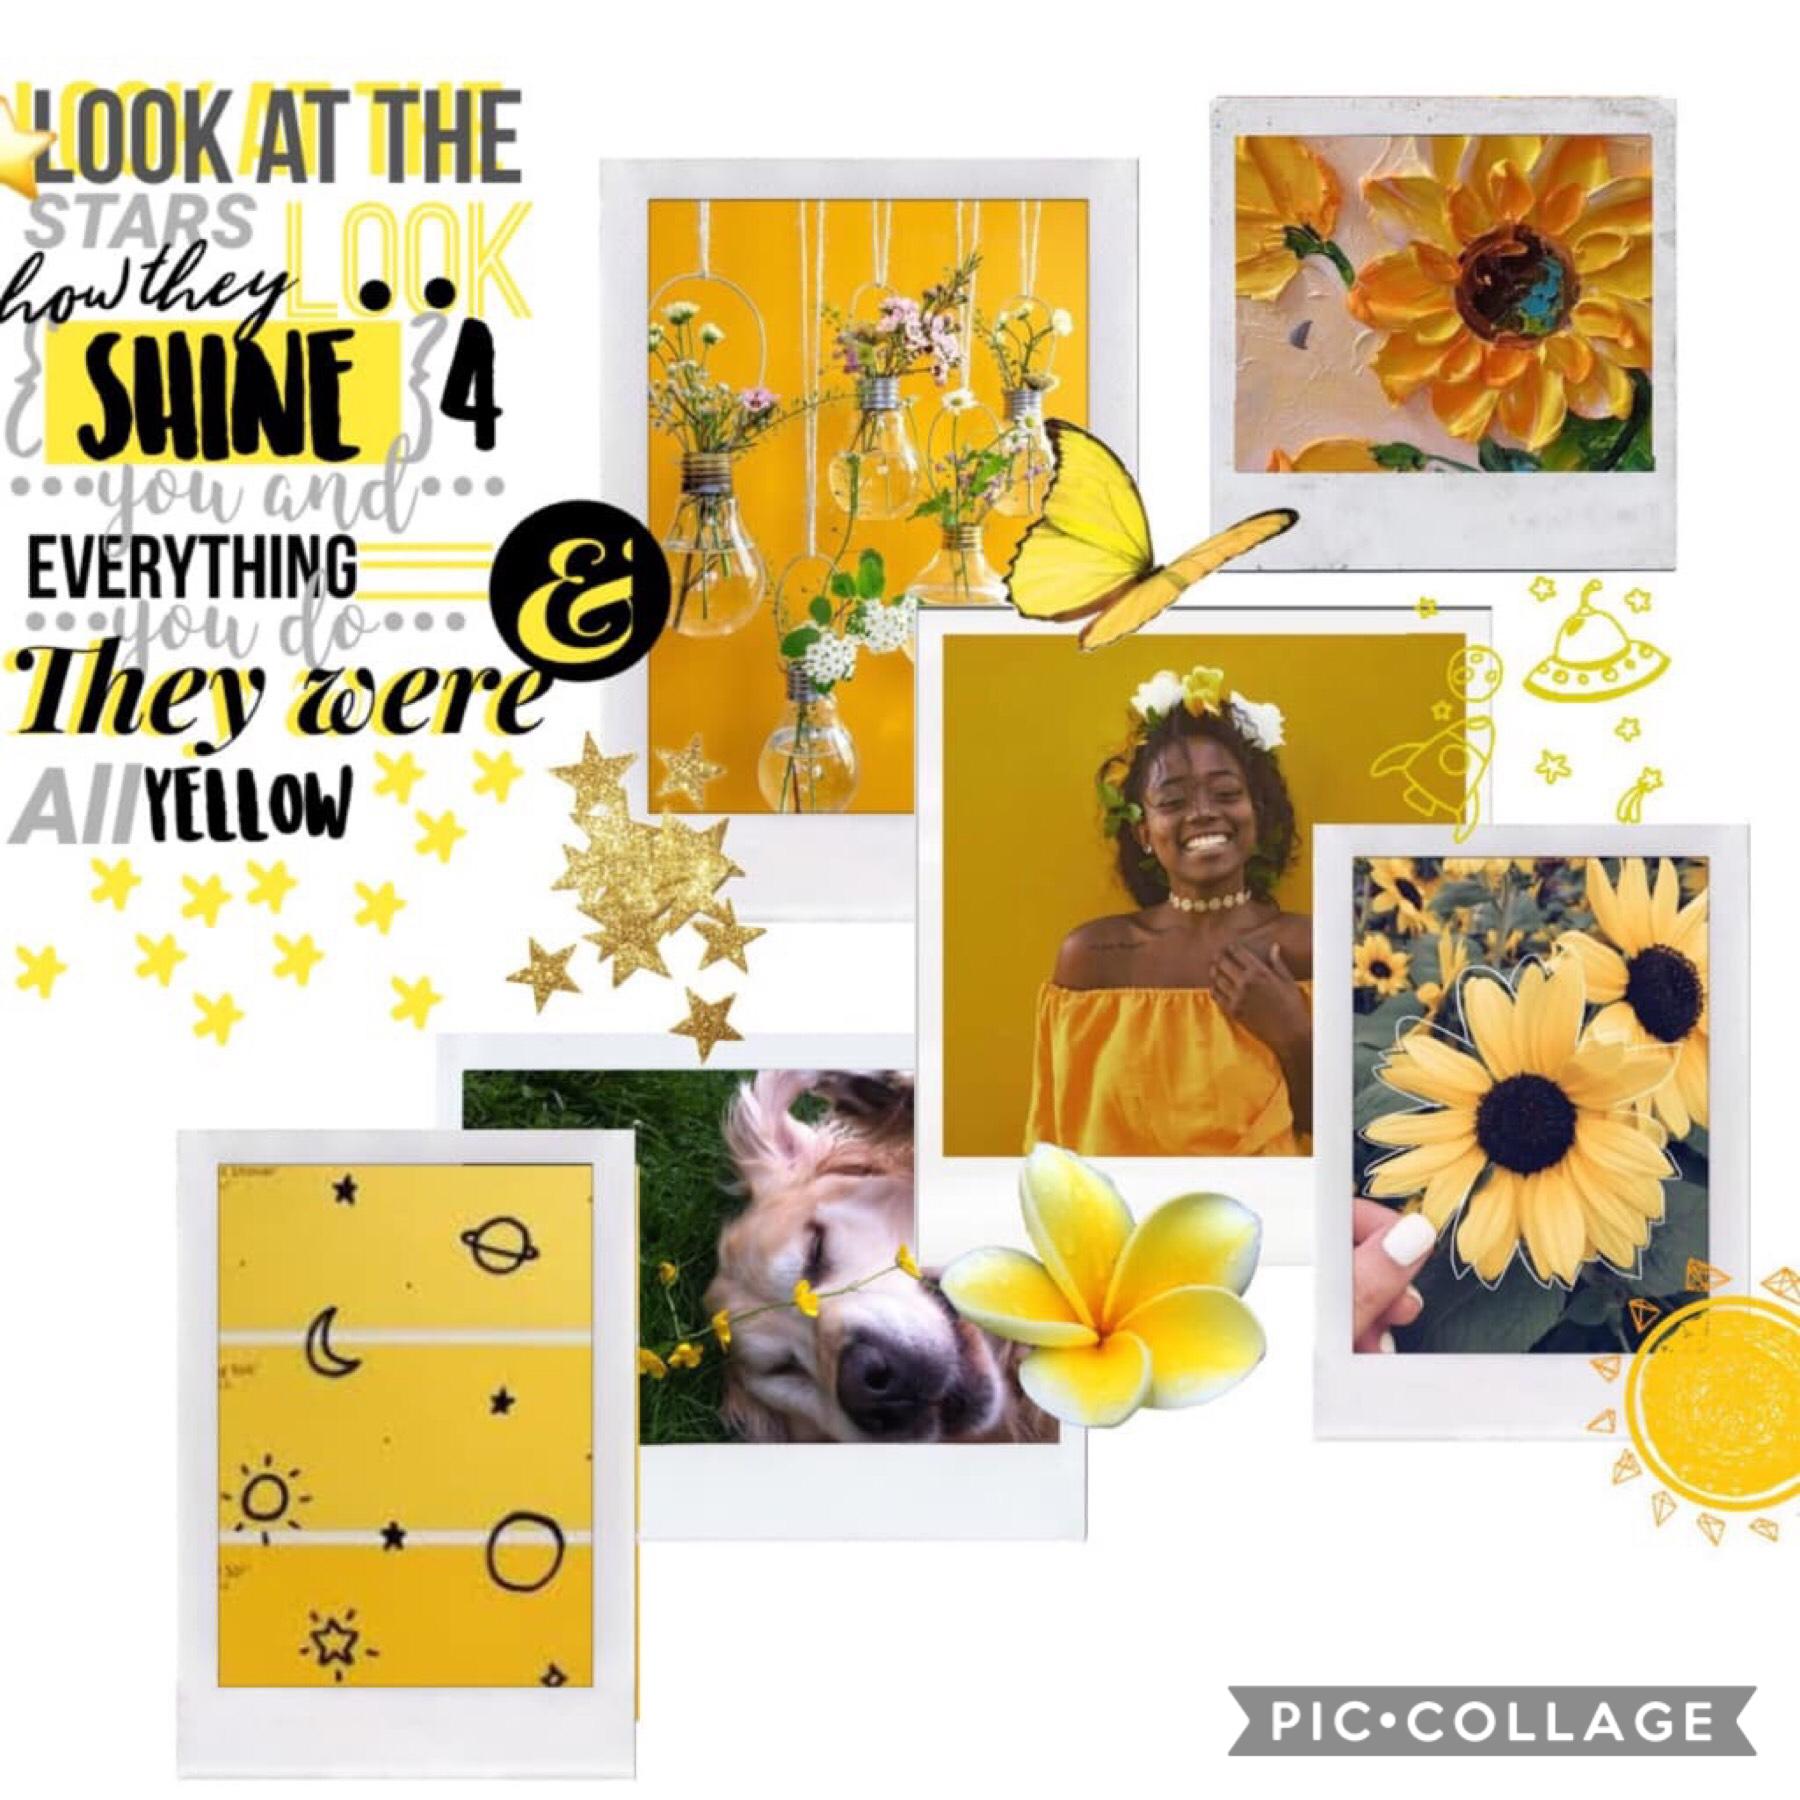 ⭐️✨
I kinda love yellow and sunflowers 